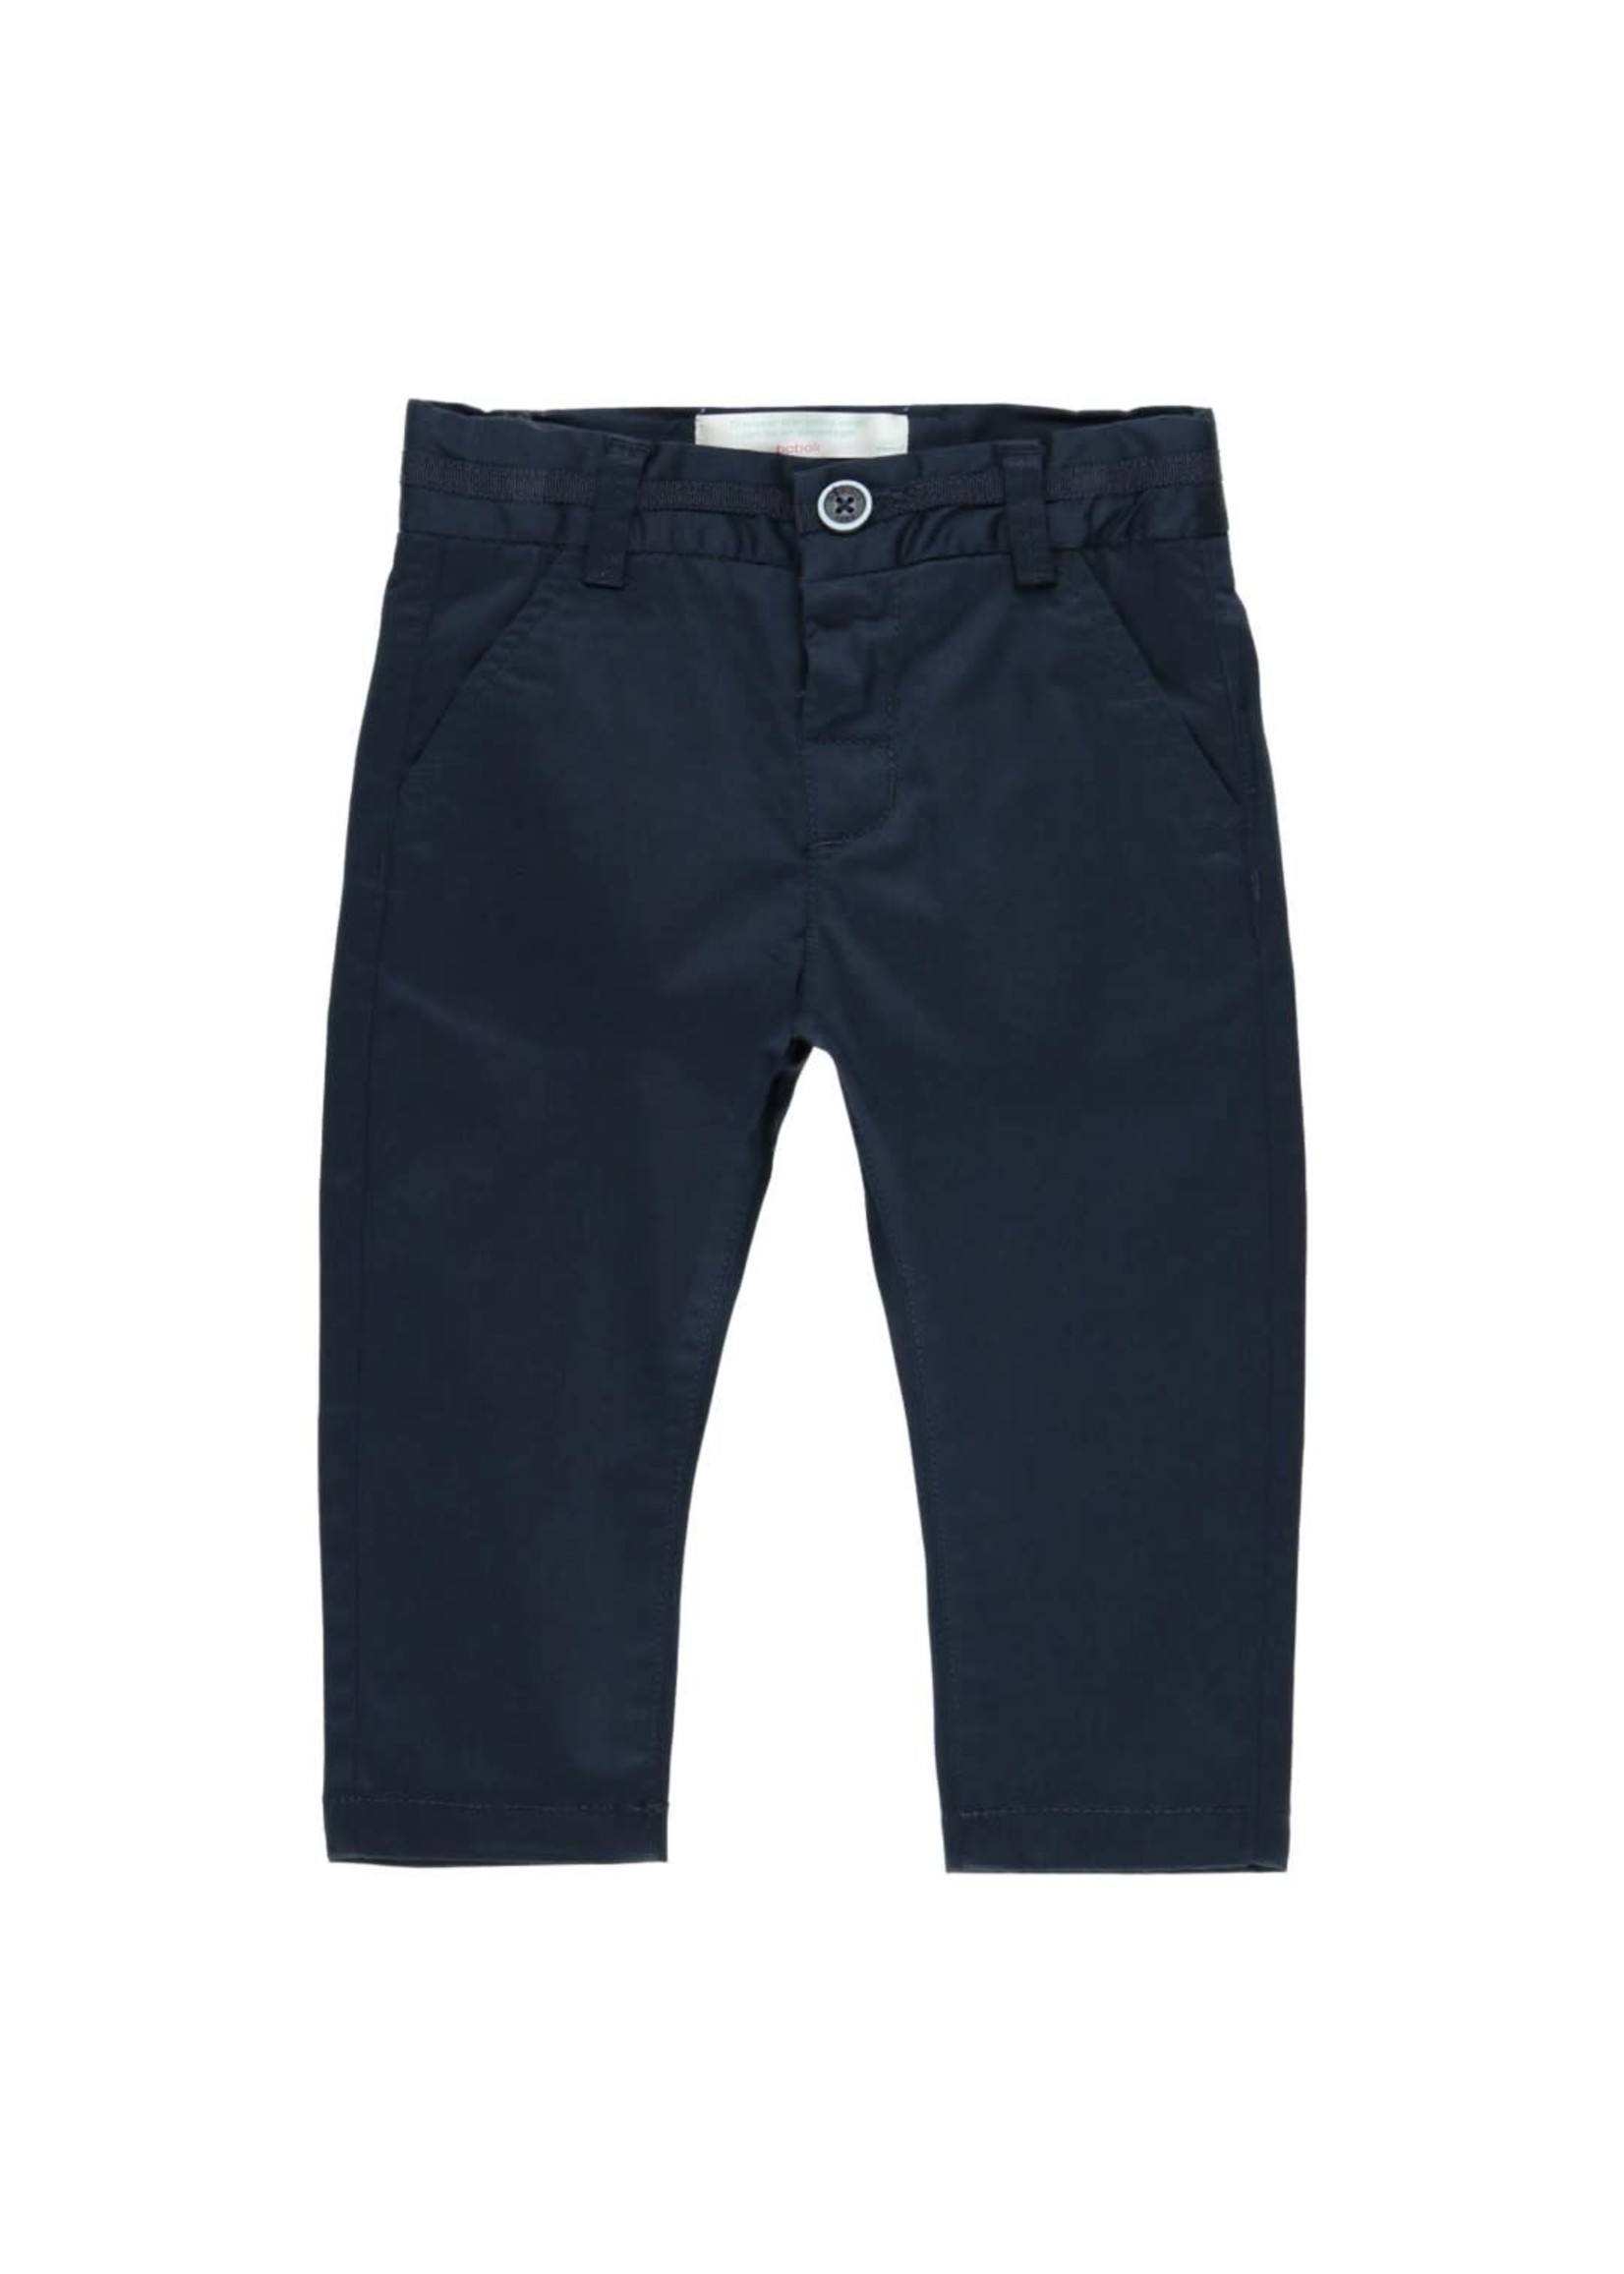 Boboli Stretch satin trousers for baby boy NAVY 712178